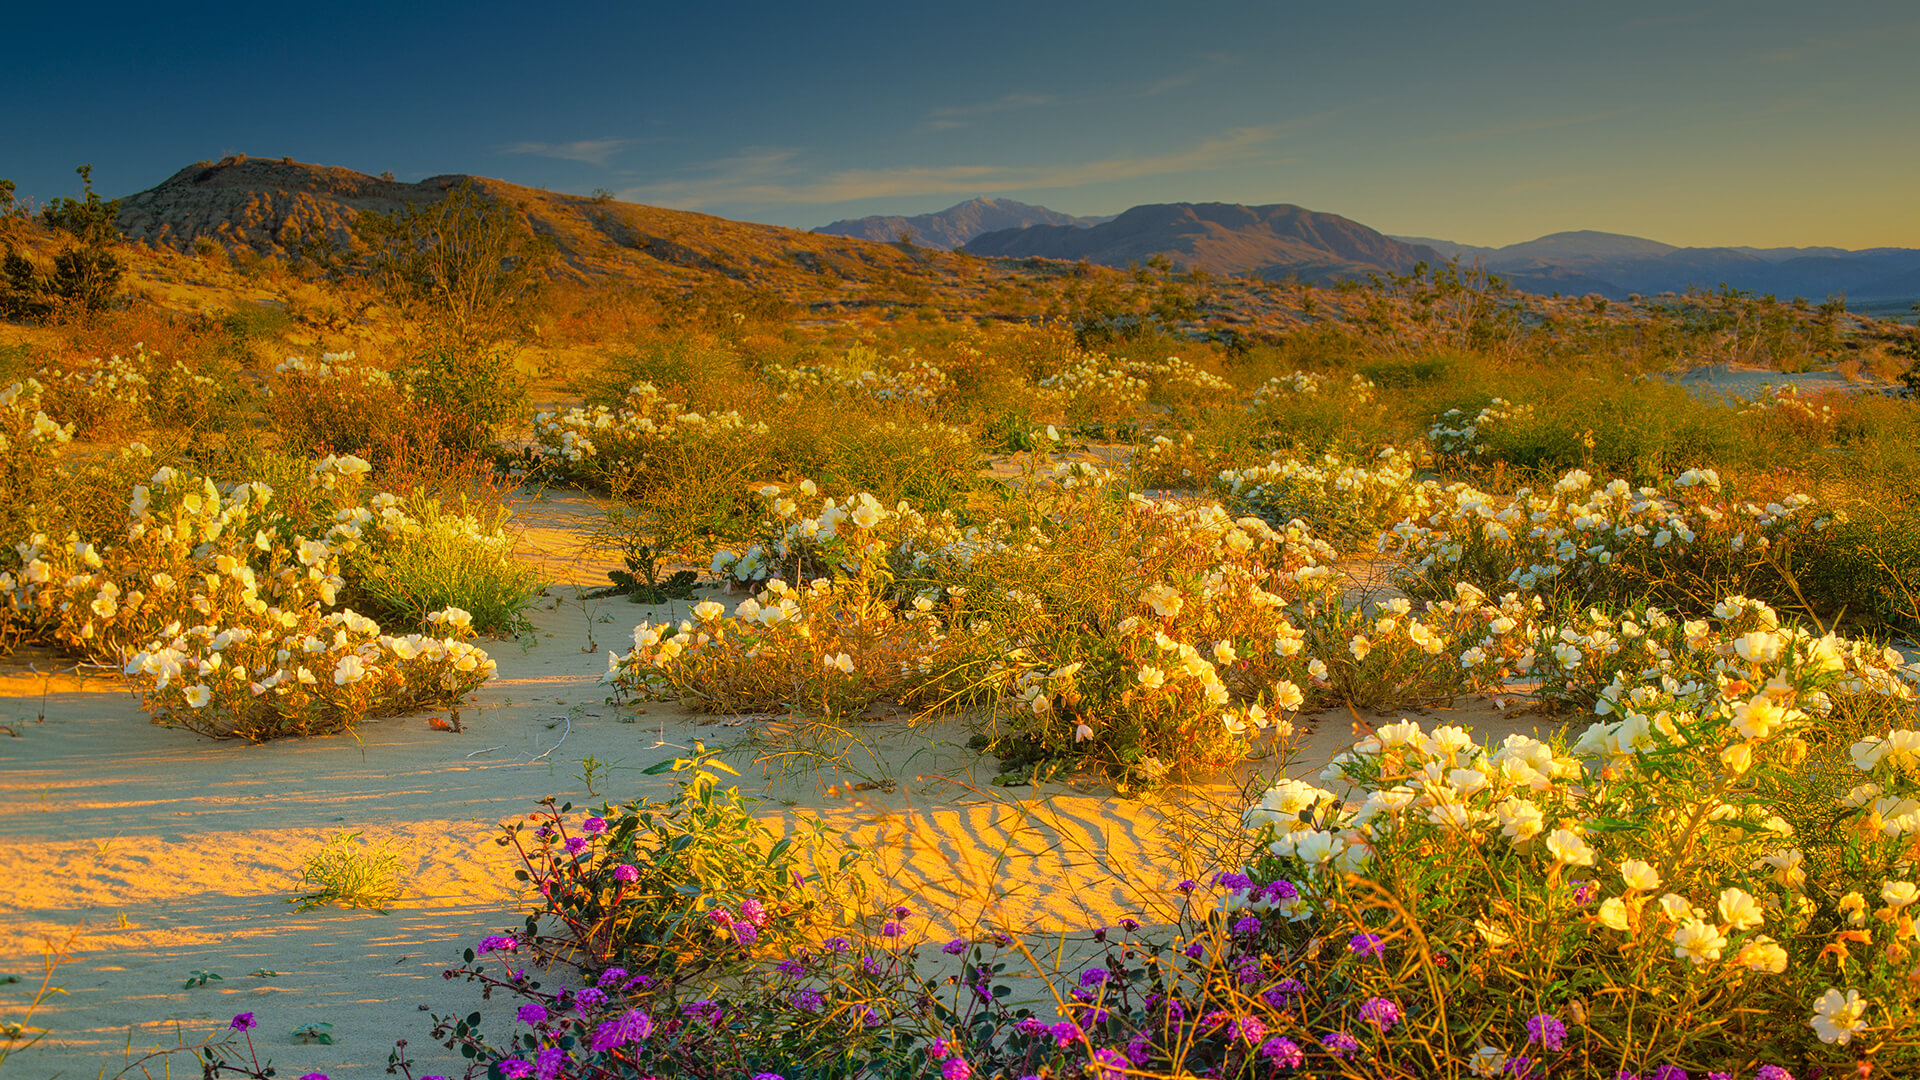 Anza Borrego Desert in bloom